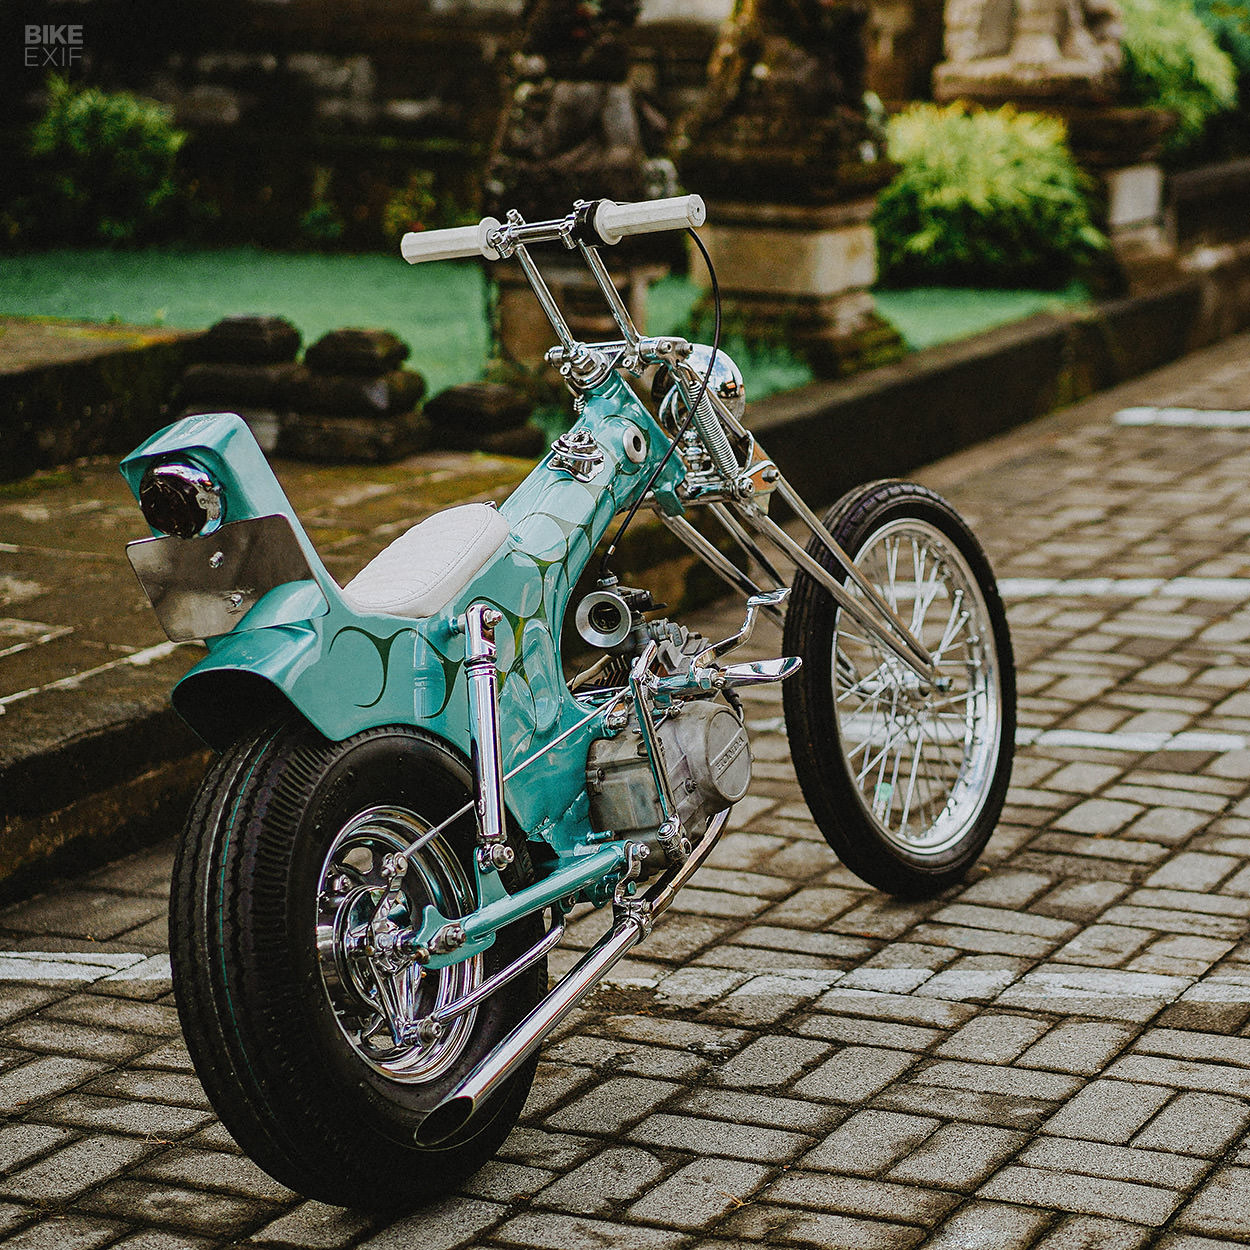 Custom Honda Dax chopper by Zambrag Garage in Bali